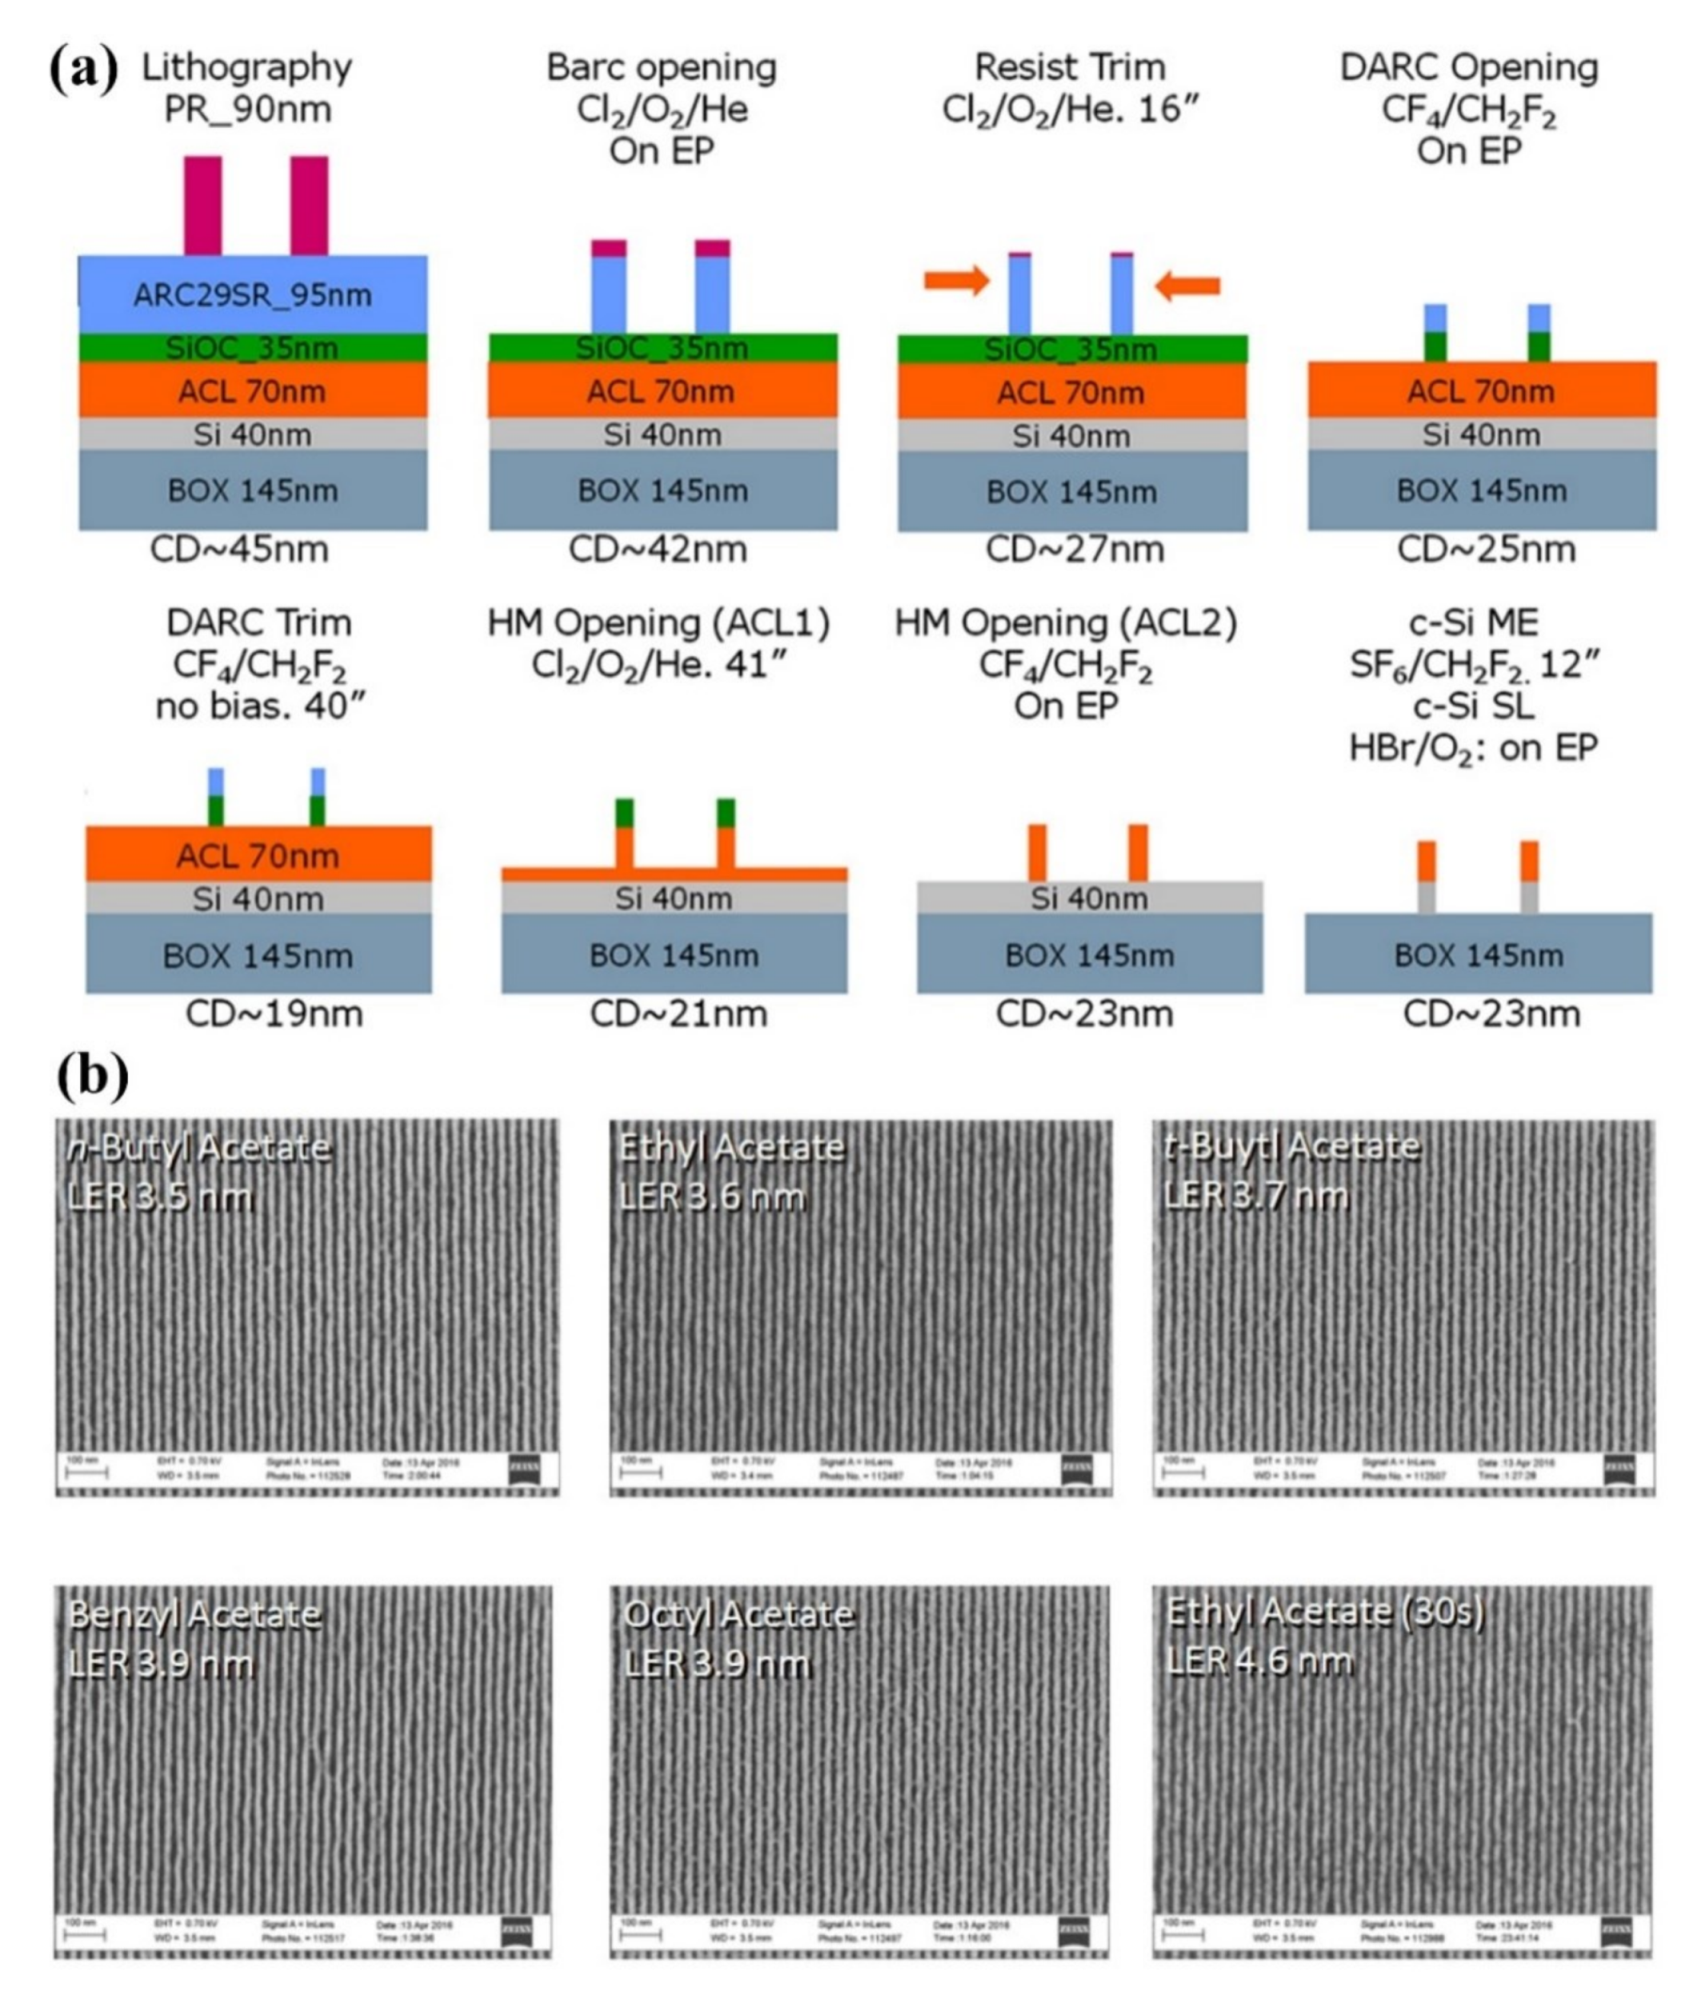 Obtaining Uniform Dopant Distributions in VLS-Grown Si Nanowires